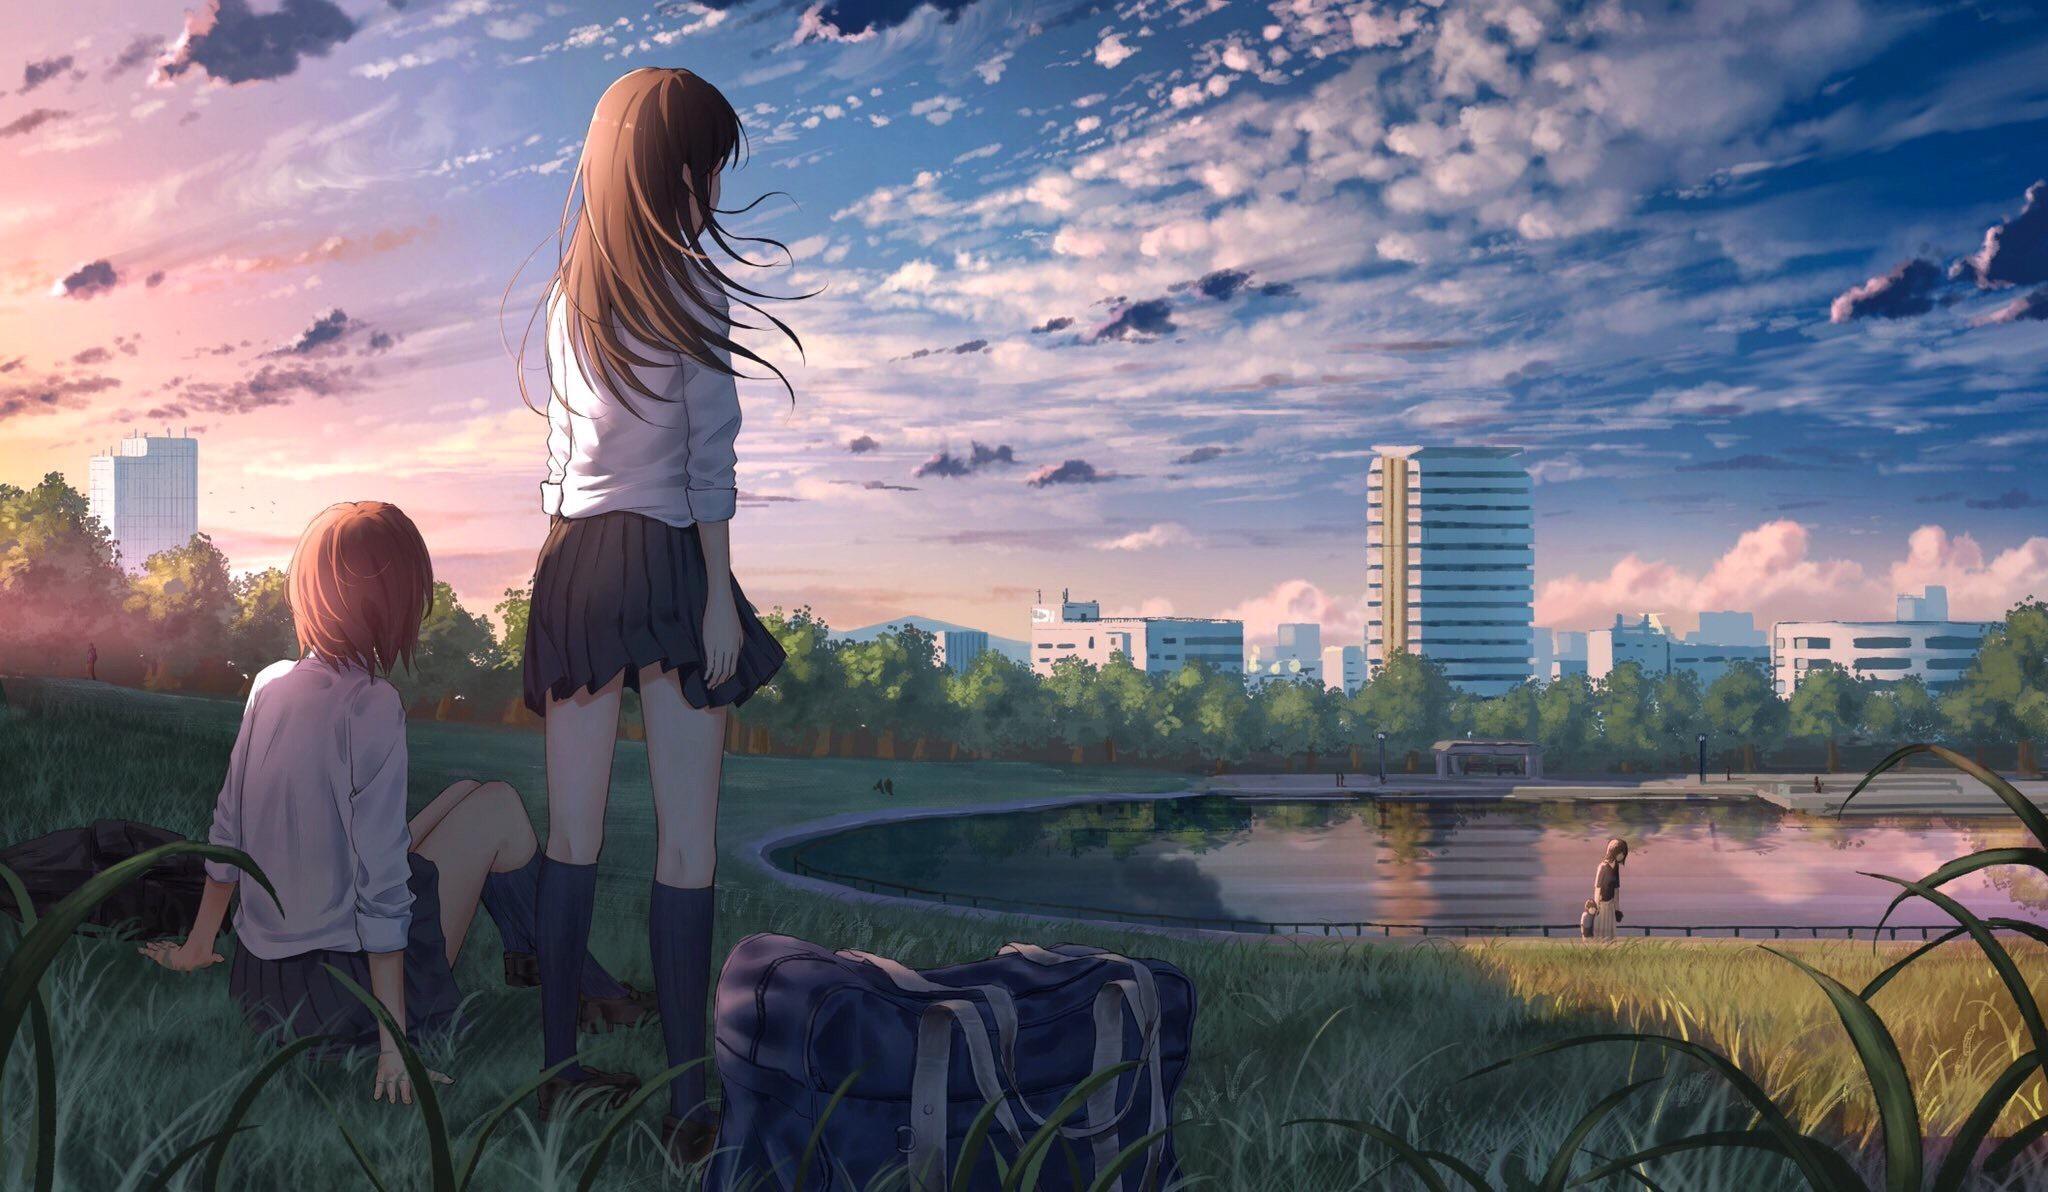 Anime Girl In School Uniform, HD Anime, 4k Wallpaper